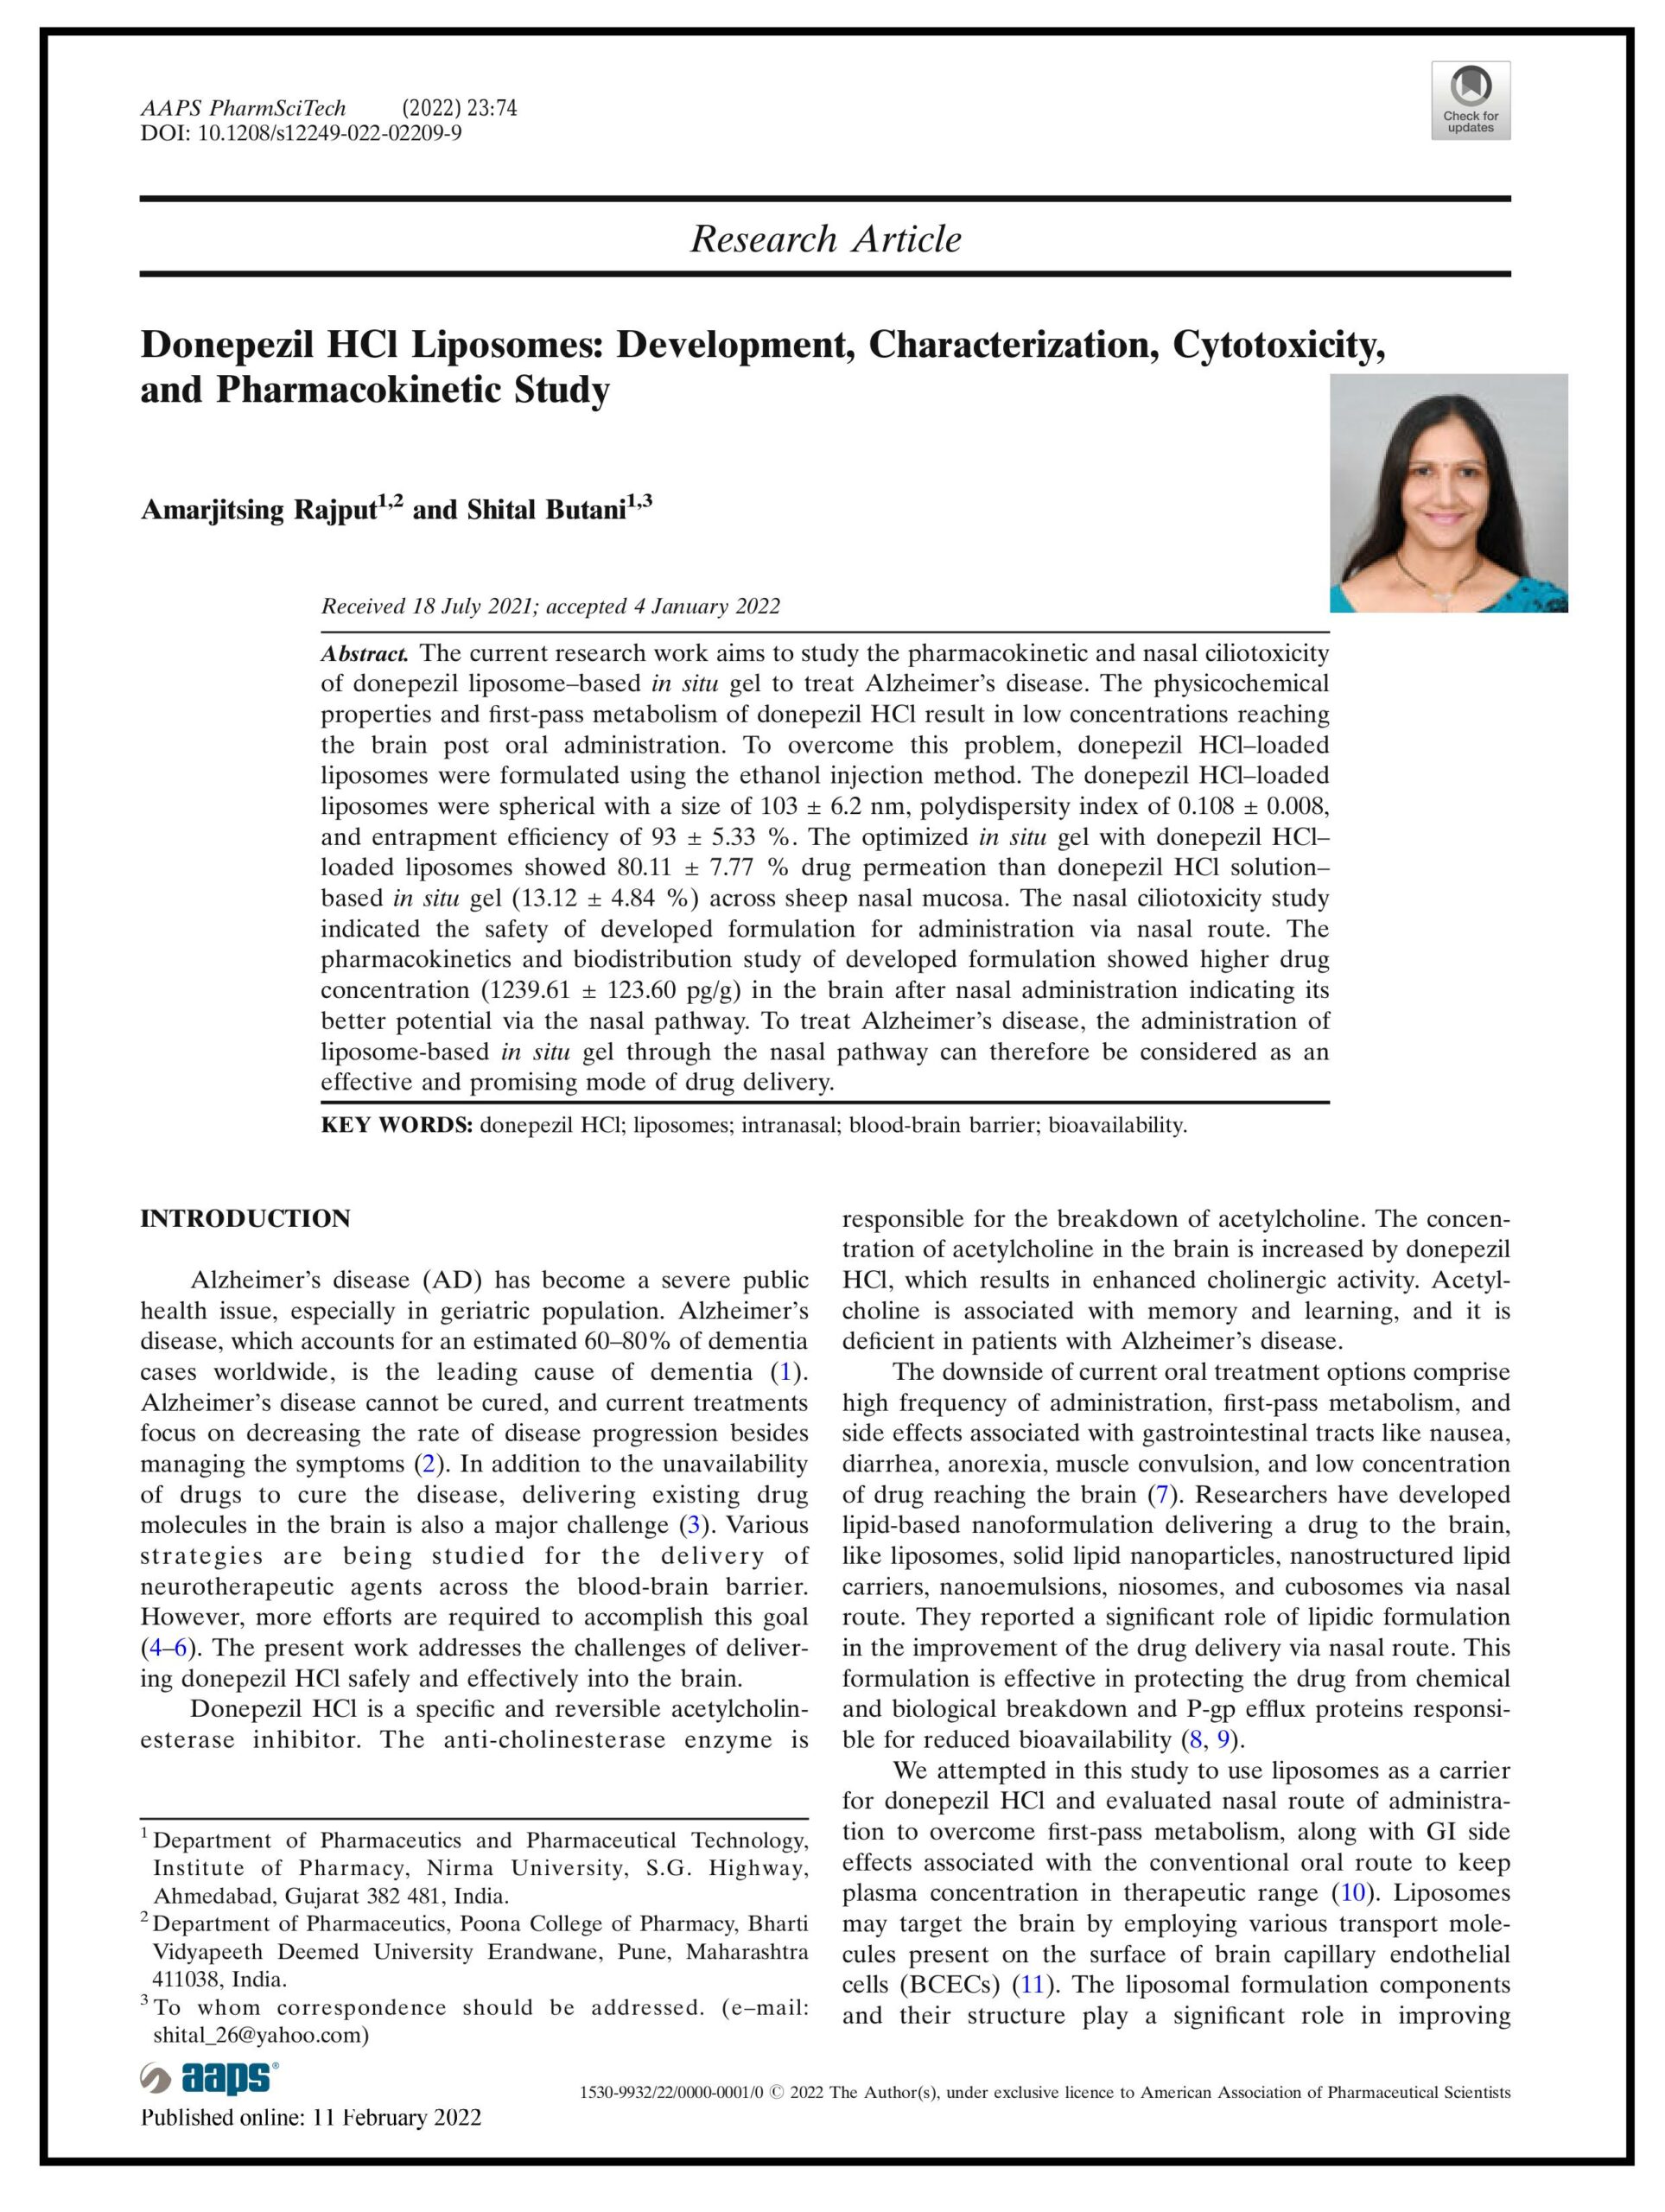 Donepezil HCl Liposomes: Development, Characterization, Cytotoxicity,and Pharmacokinetic Study